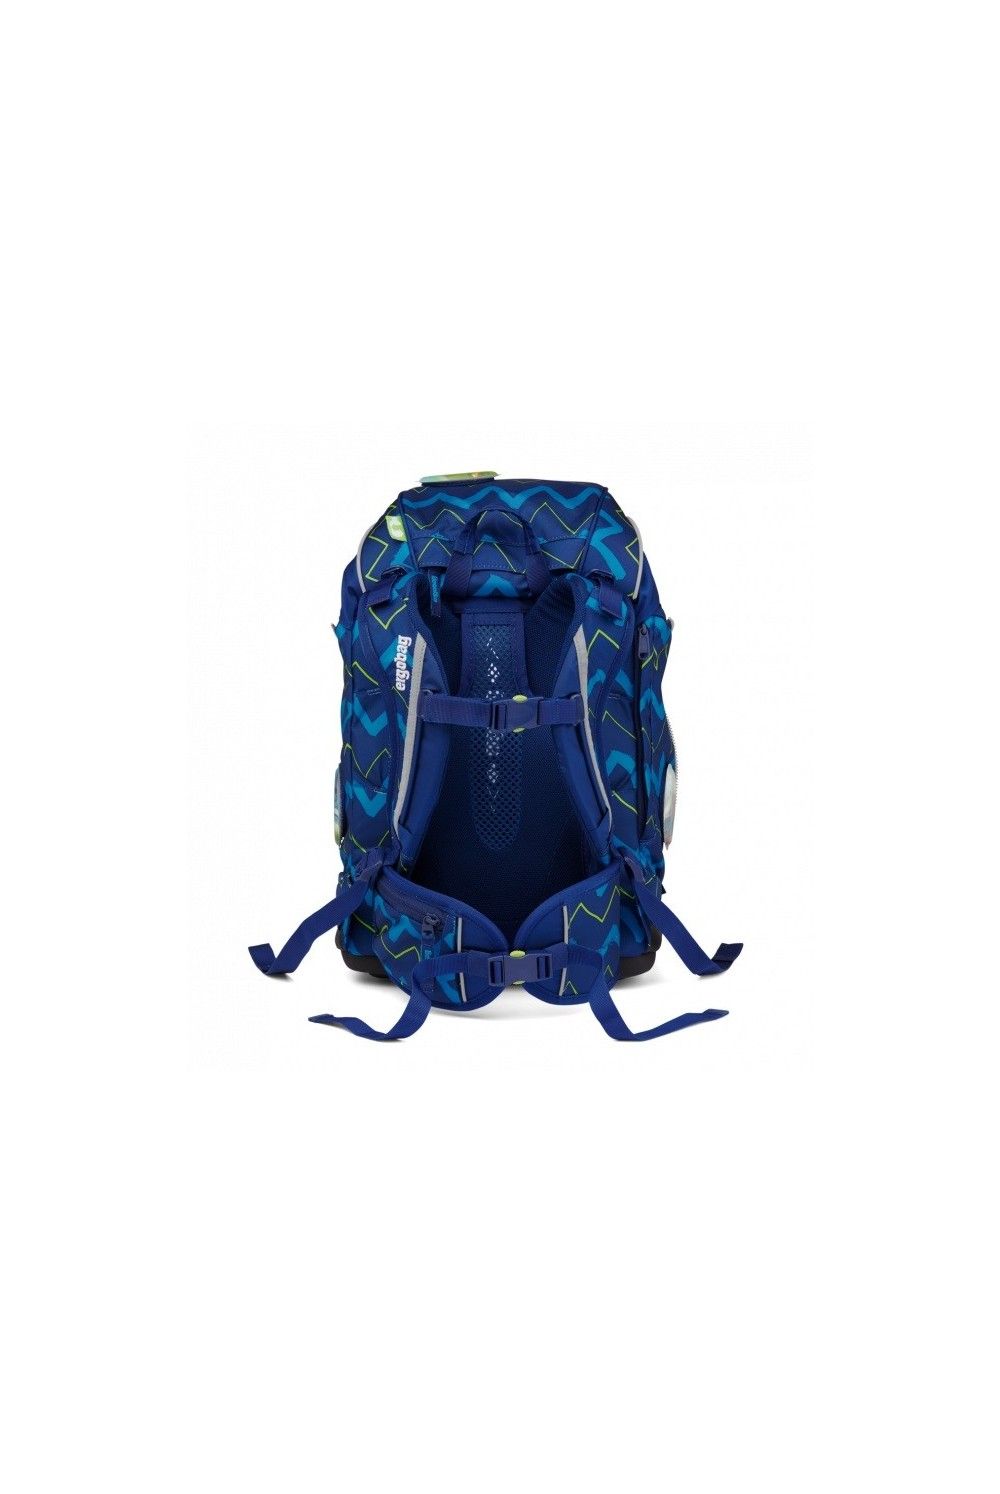 ergobag pack school backpack set 6 pieces FallrückziehBär